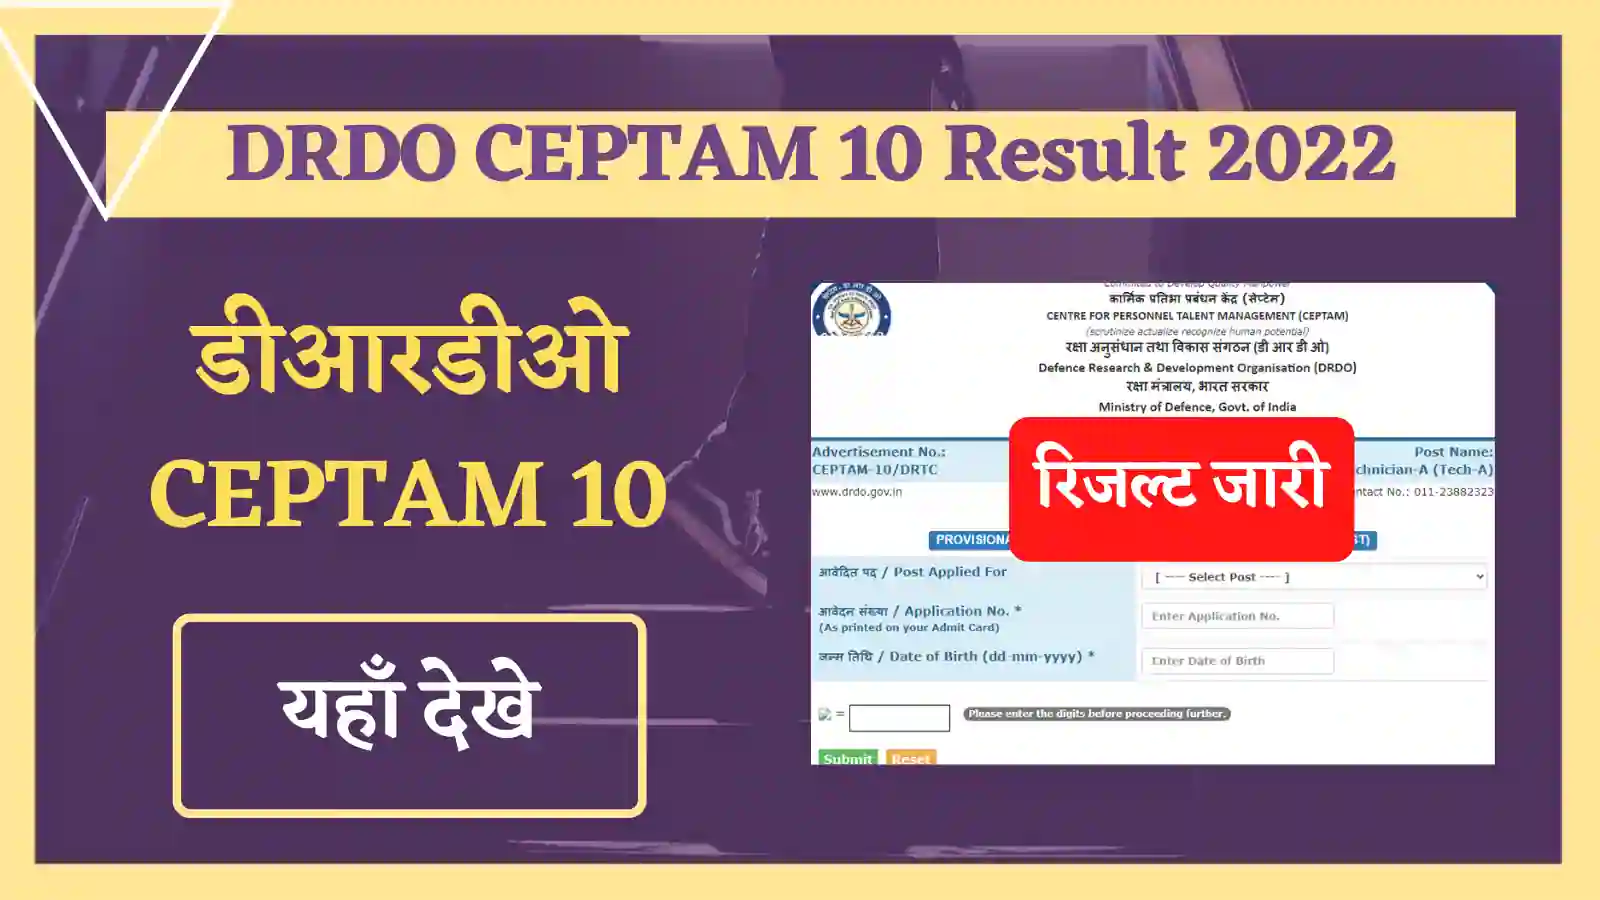 DRDO CEPTAM 10 Result 2022 in Hindi